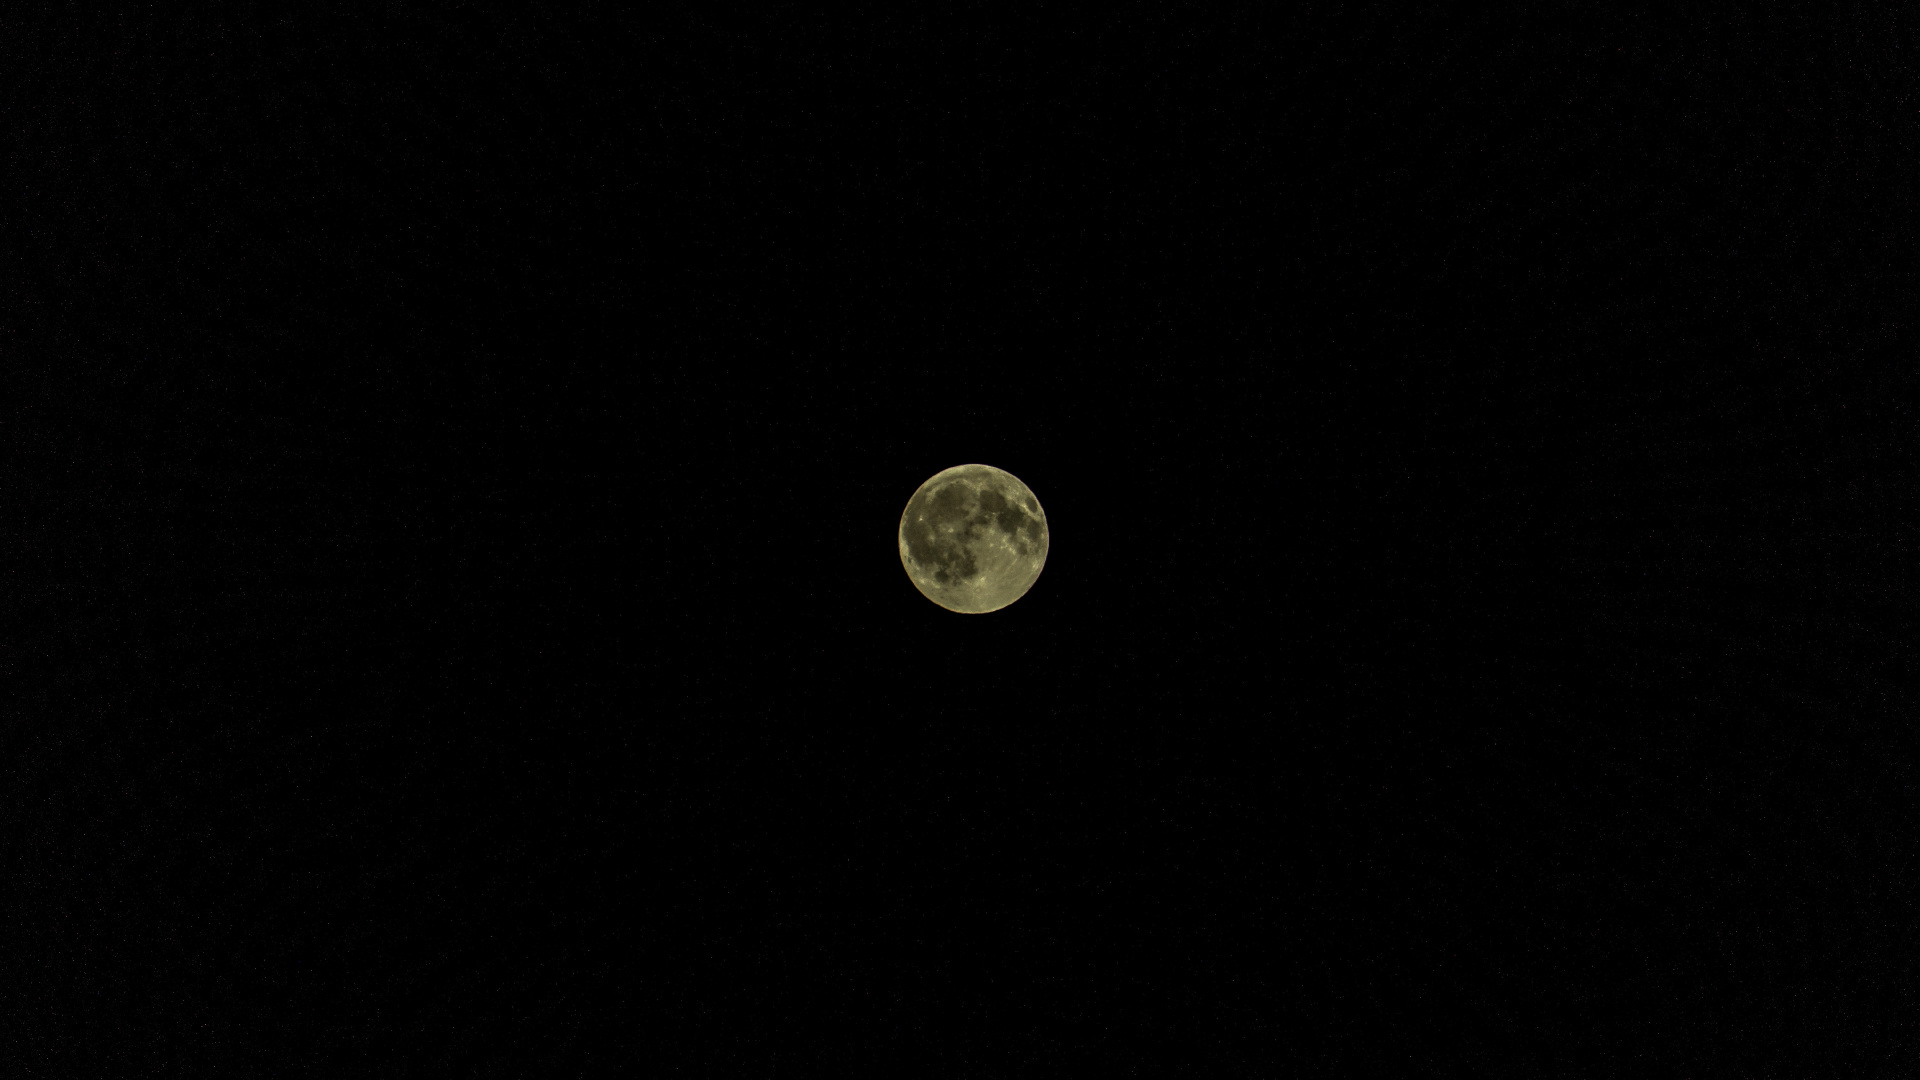 Full Moon in The Night Sky. Wallpaper in 1920x1080 Resolution